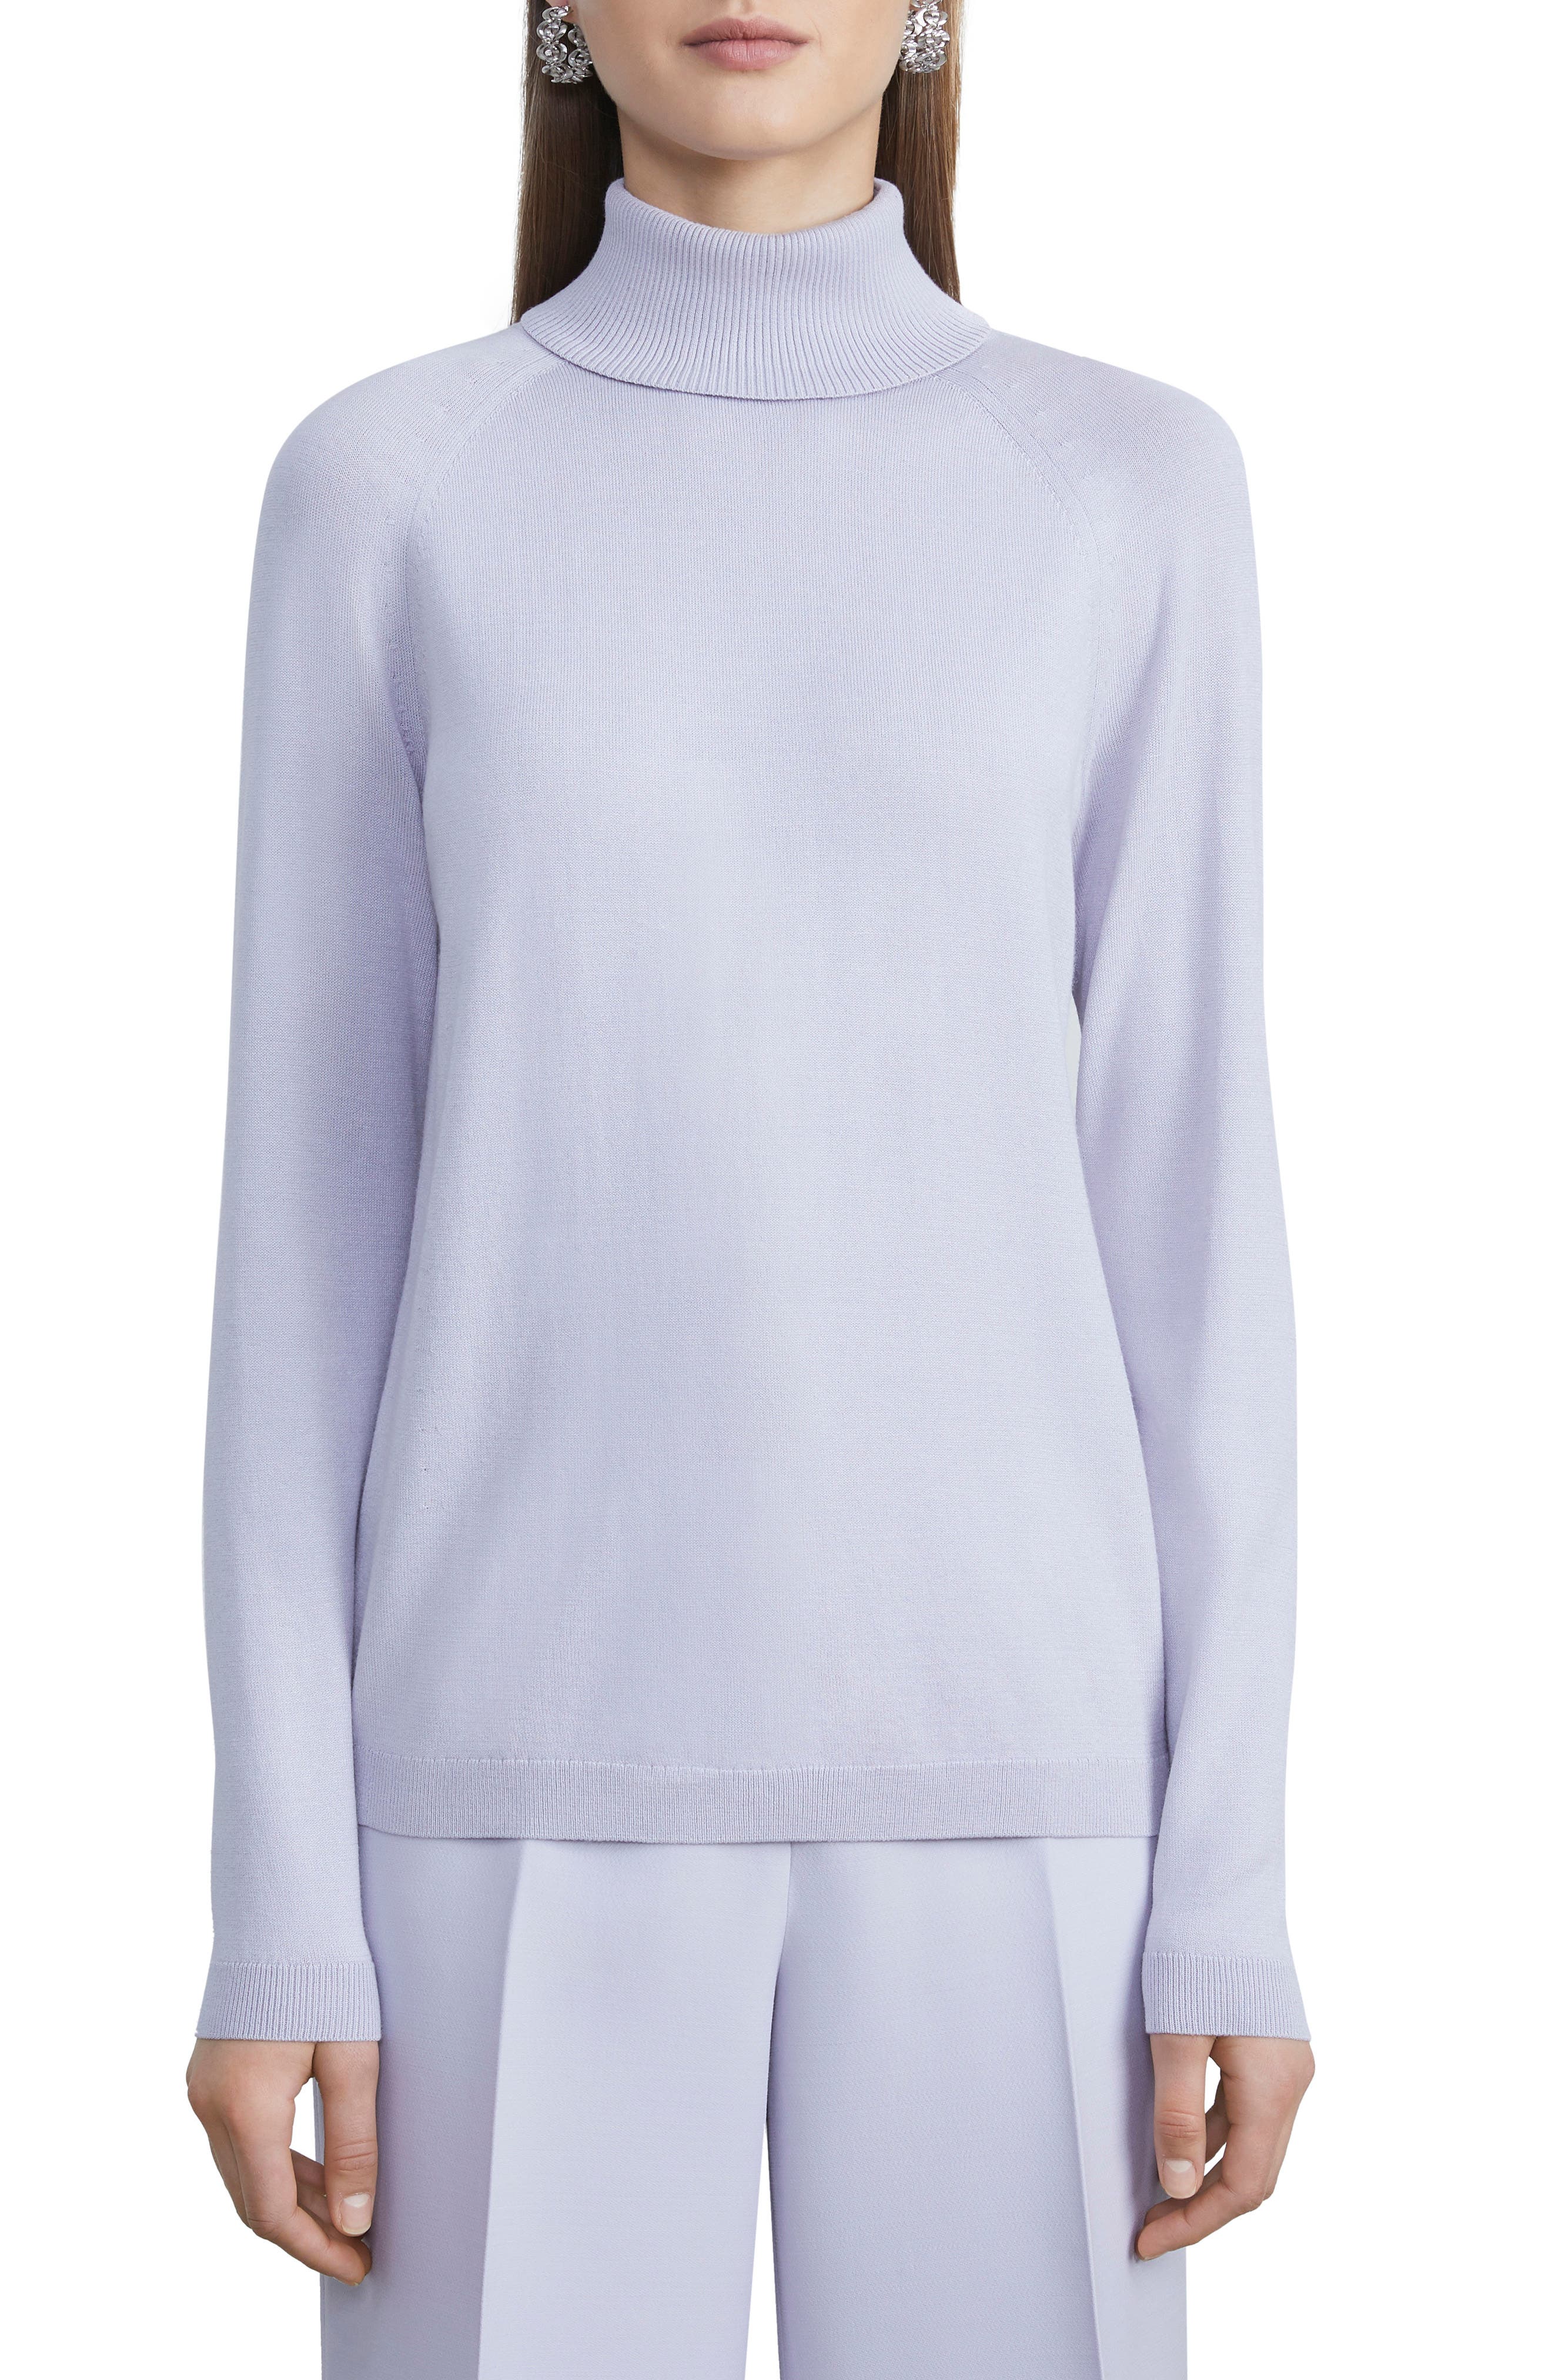 Women Monogram long turtleneck merino wool Clothing Gender-Neutral Adult Clothing Hoodies & Sweatshirts Sweatshirts 